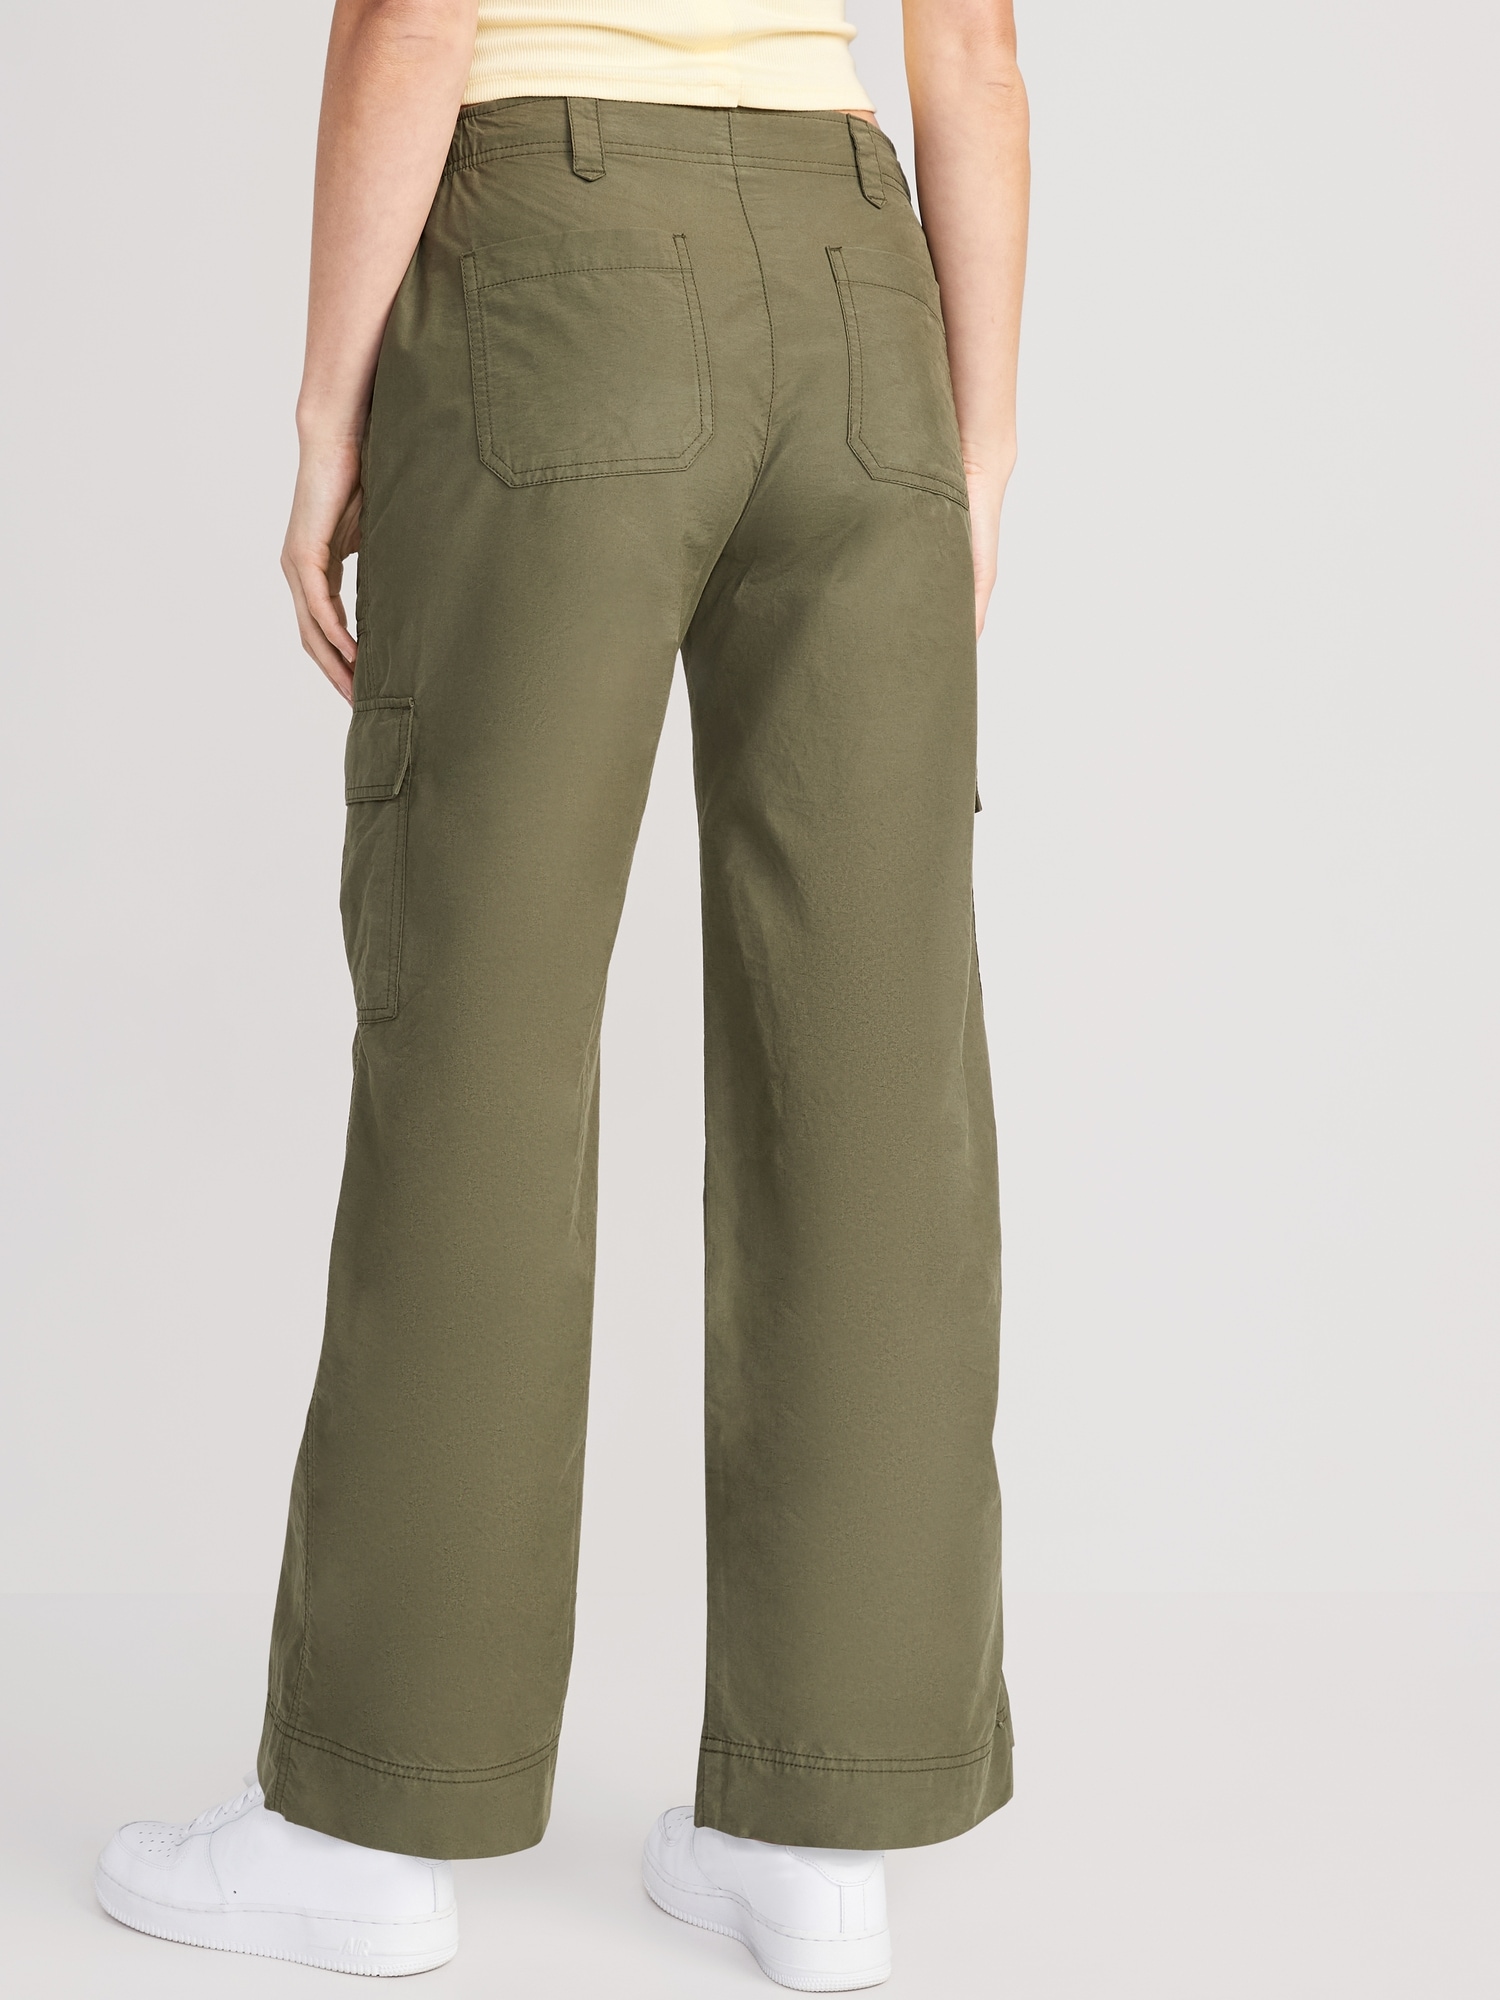 Old Navy Linen Blend Cargo Pants for Women